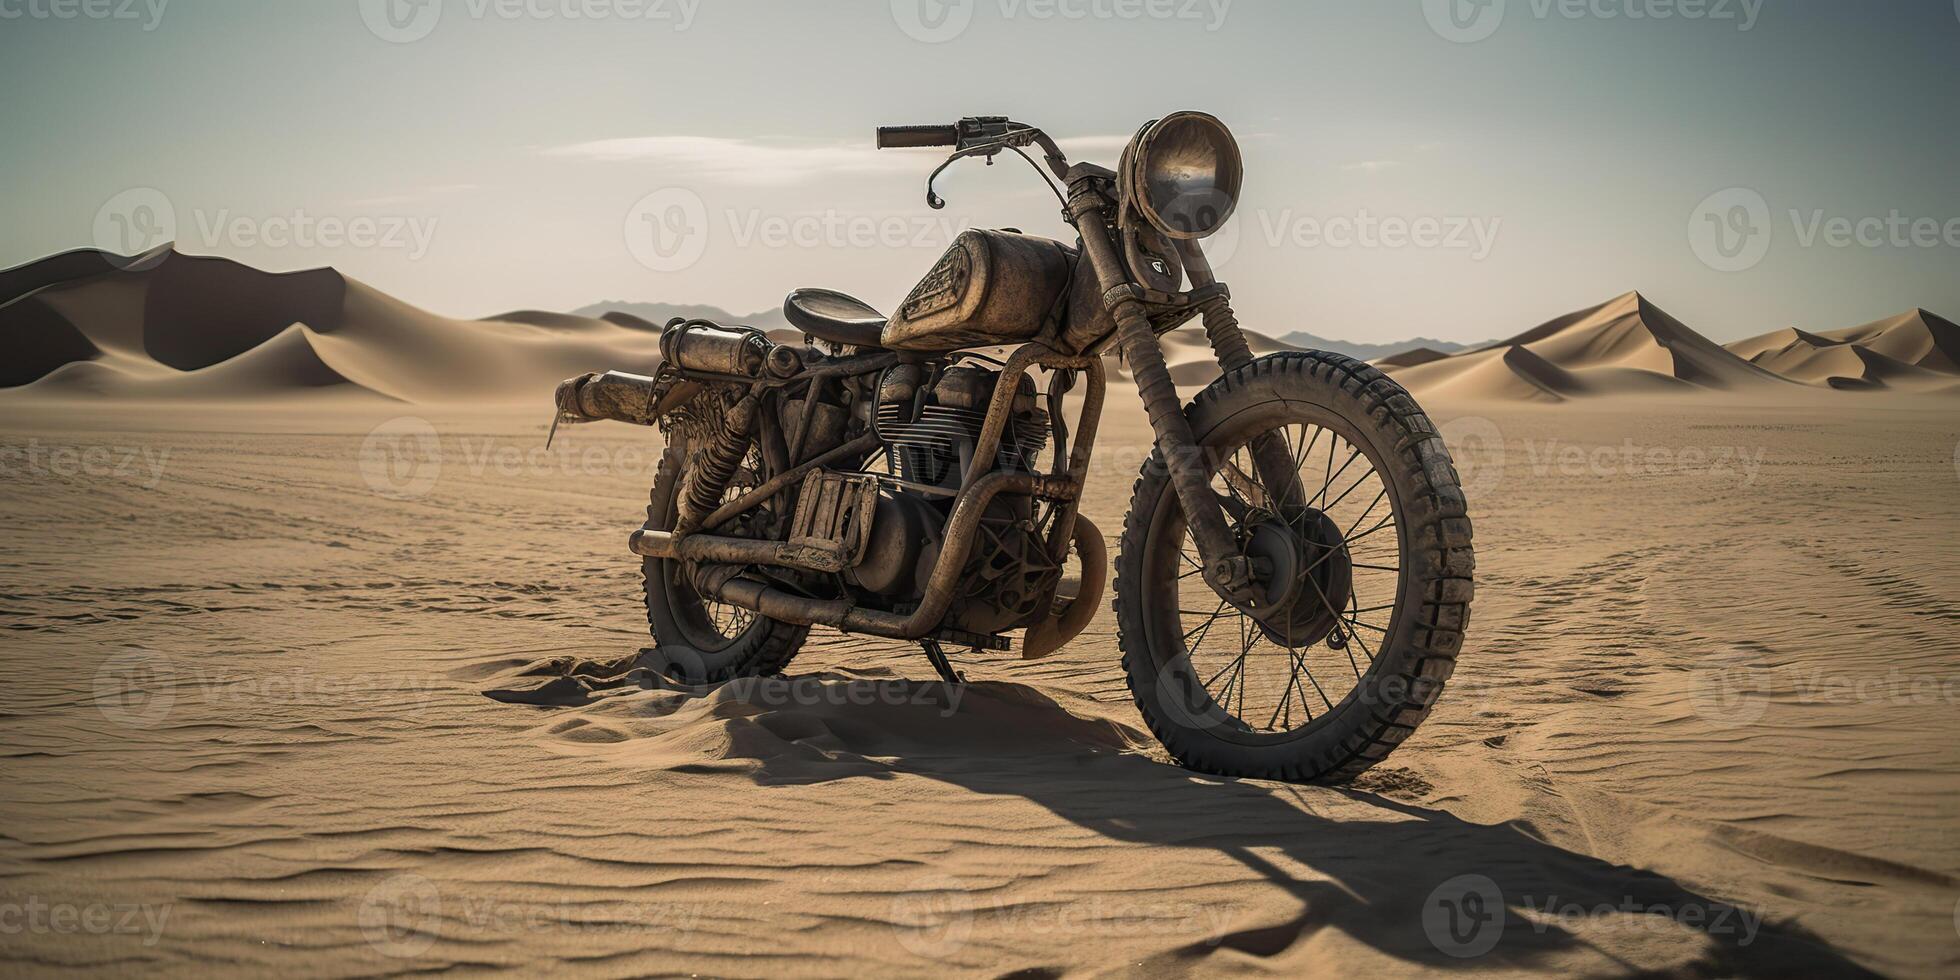 . . Old vintage retro brutal motor bike in desert road. Mad Max movie inspired. Adventure explore travel vibe. Graphic Art photo